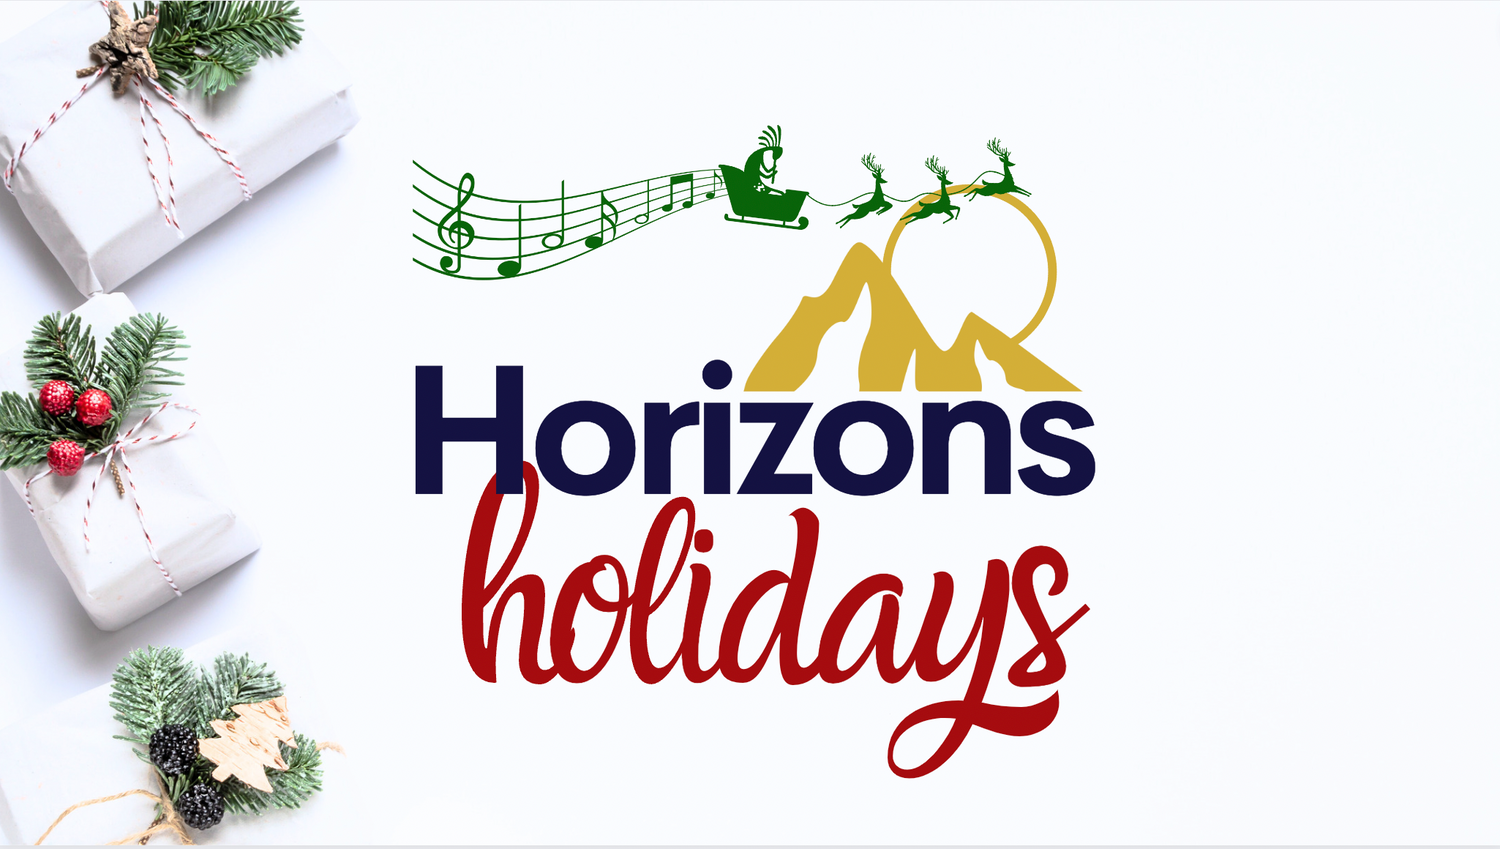 Horizons Holidays Are Here!